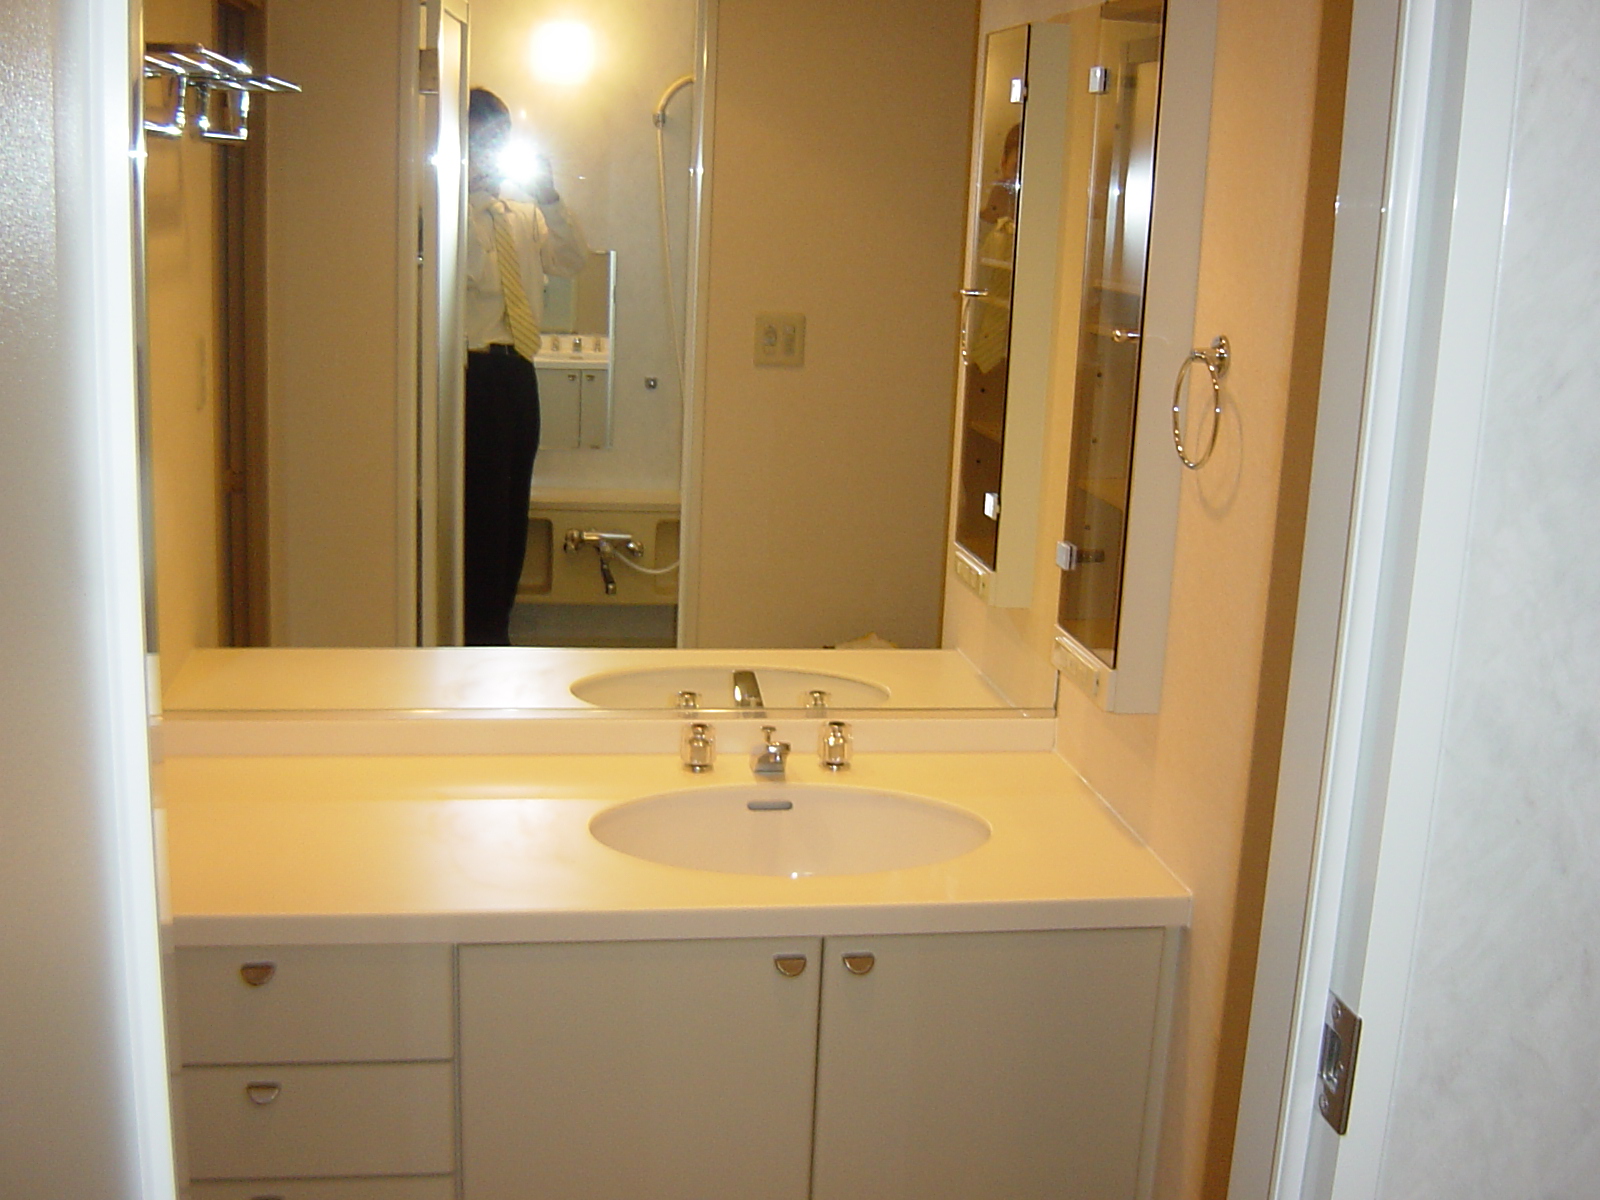 Washroom. With large mirror